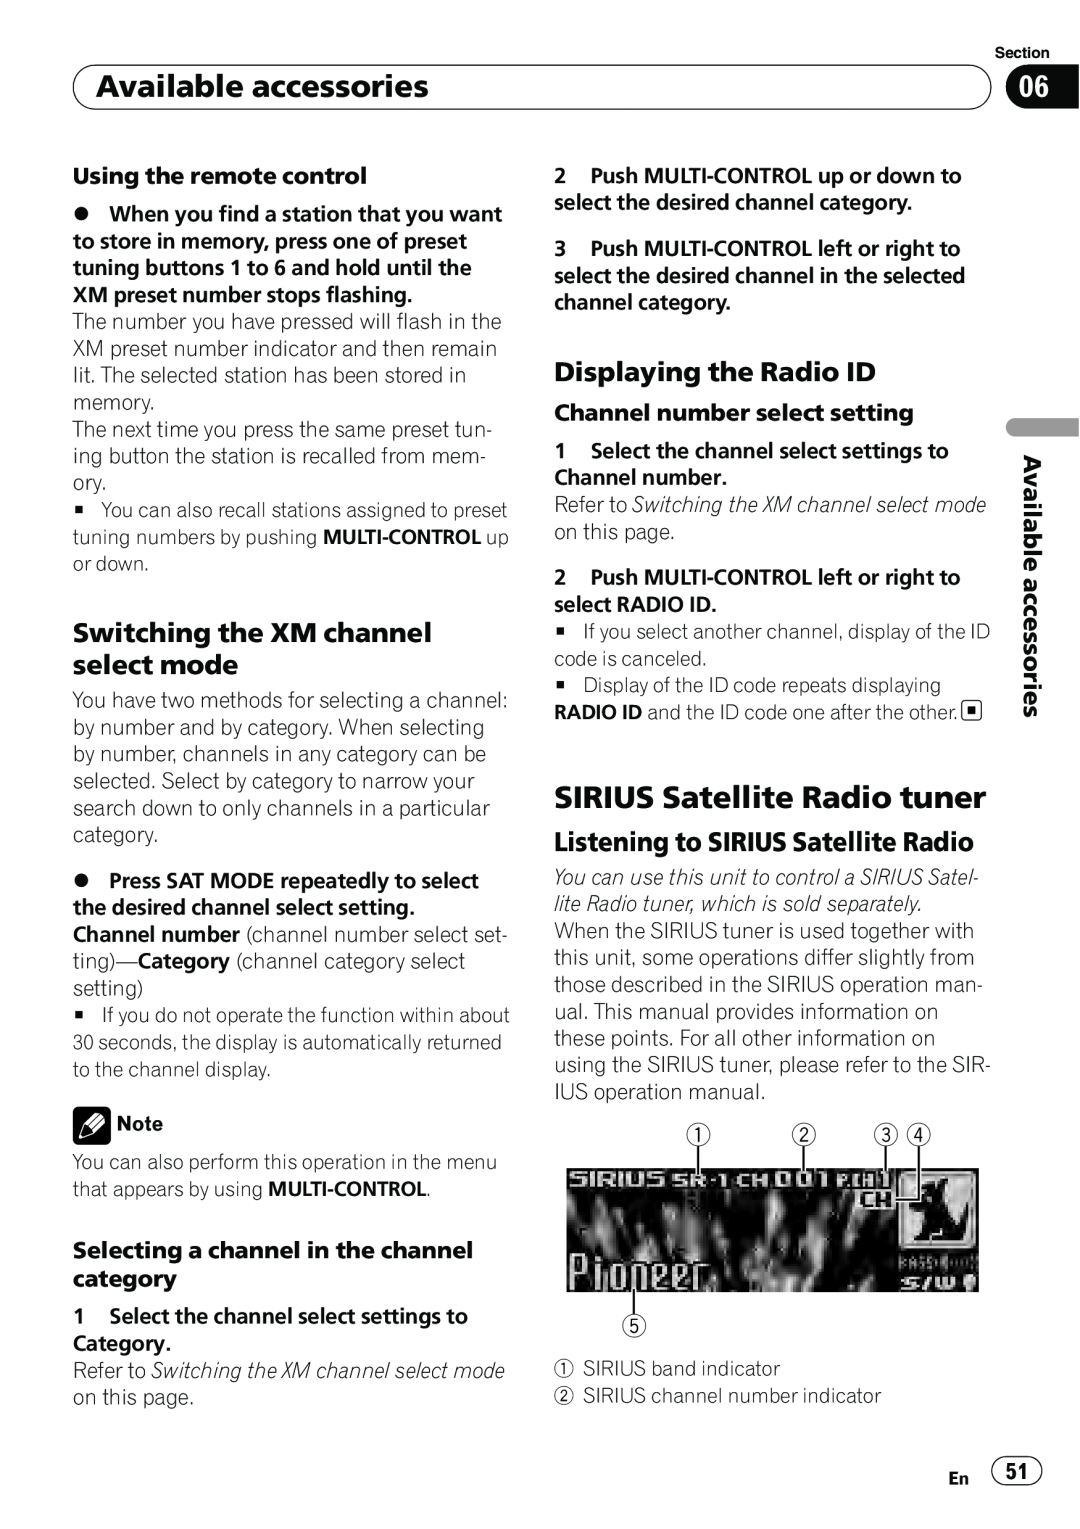 Pioneer DEH-P6000UB SIRIUS Satellite Radio tuner, Switching the XM channel select mode, Displaying the Radio ID 